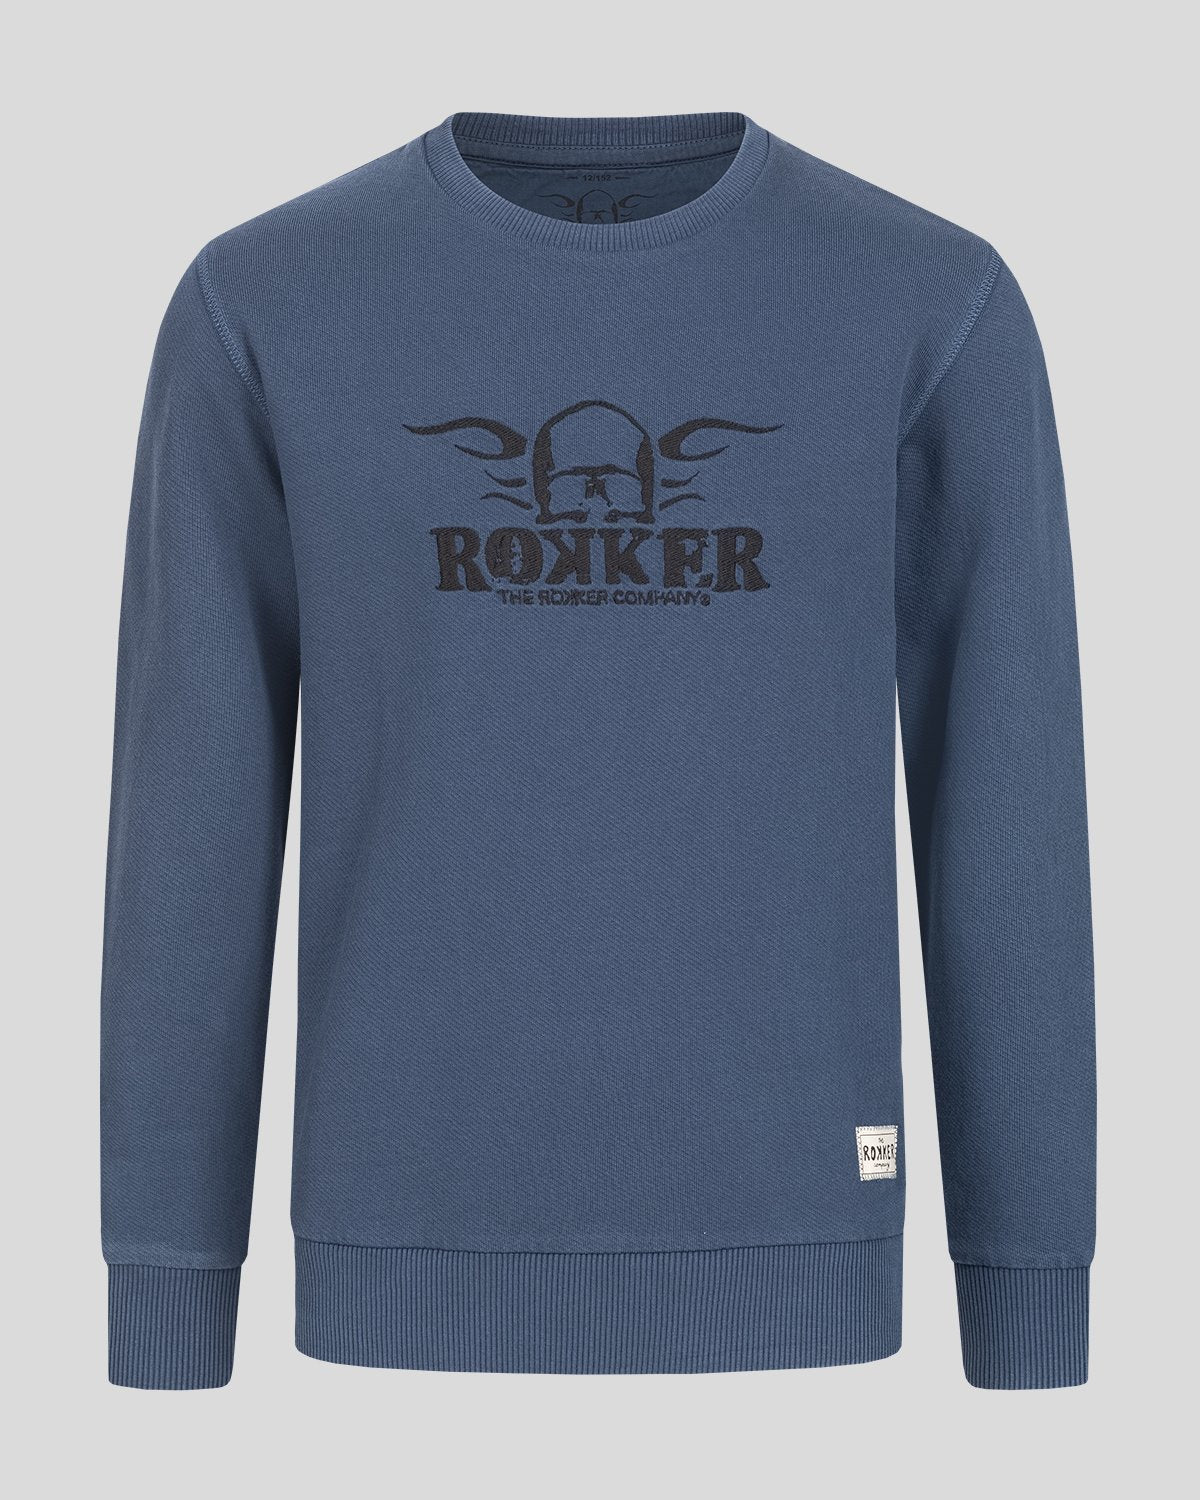 Rokker Kids Sweater Navy T-Shirt The Rokker Company 